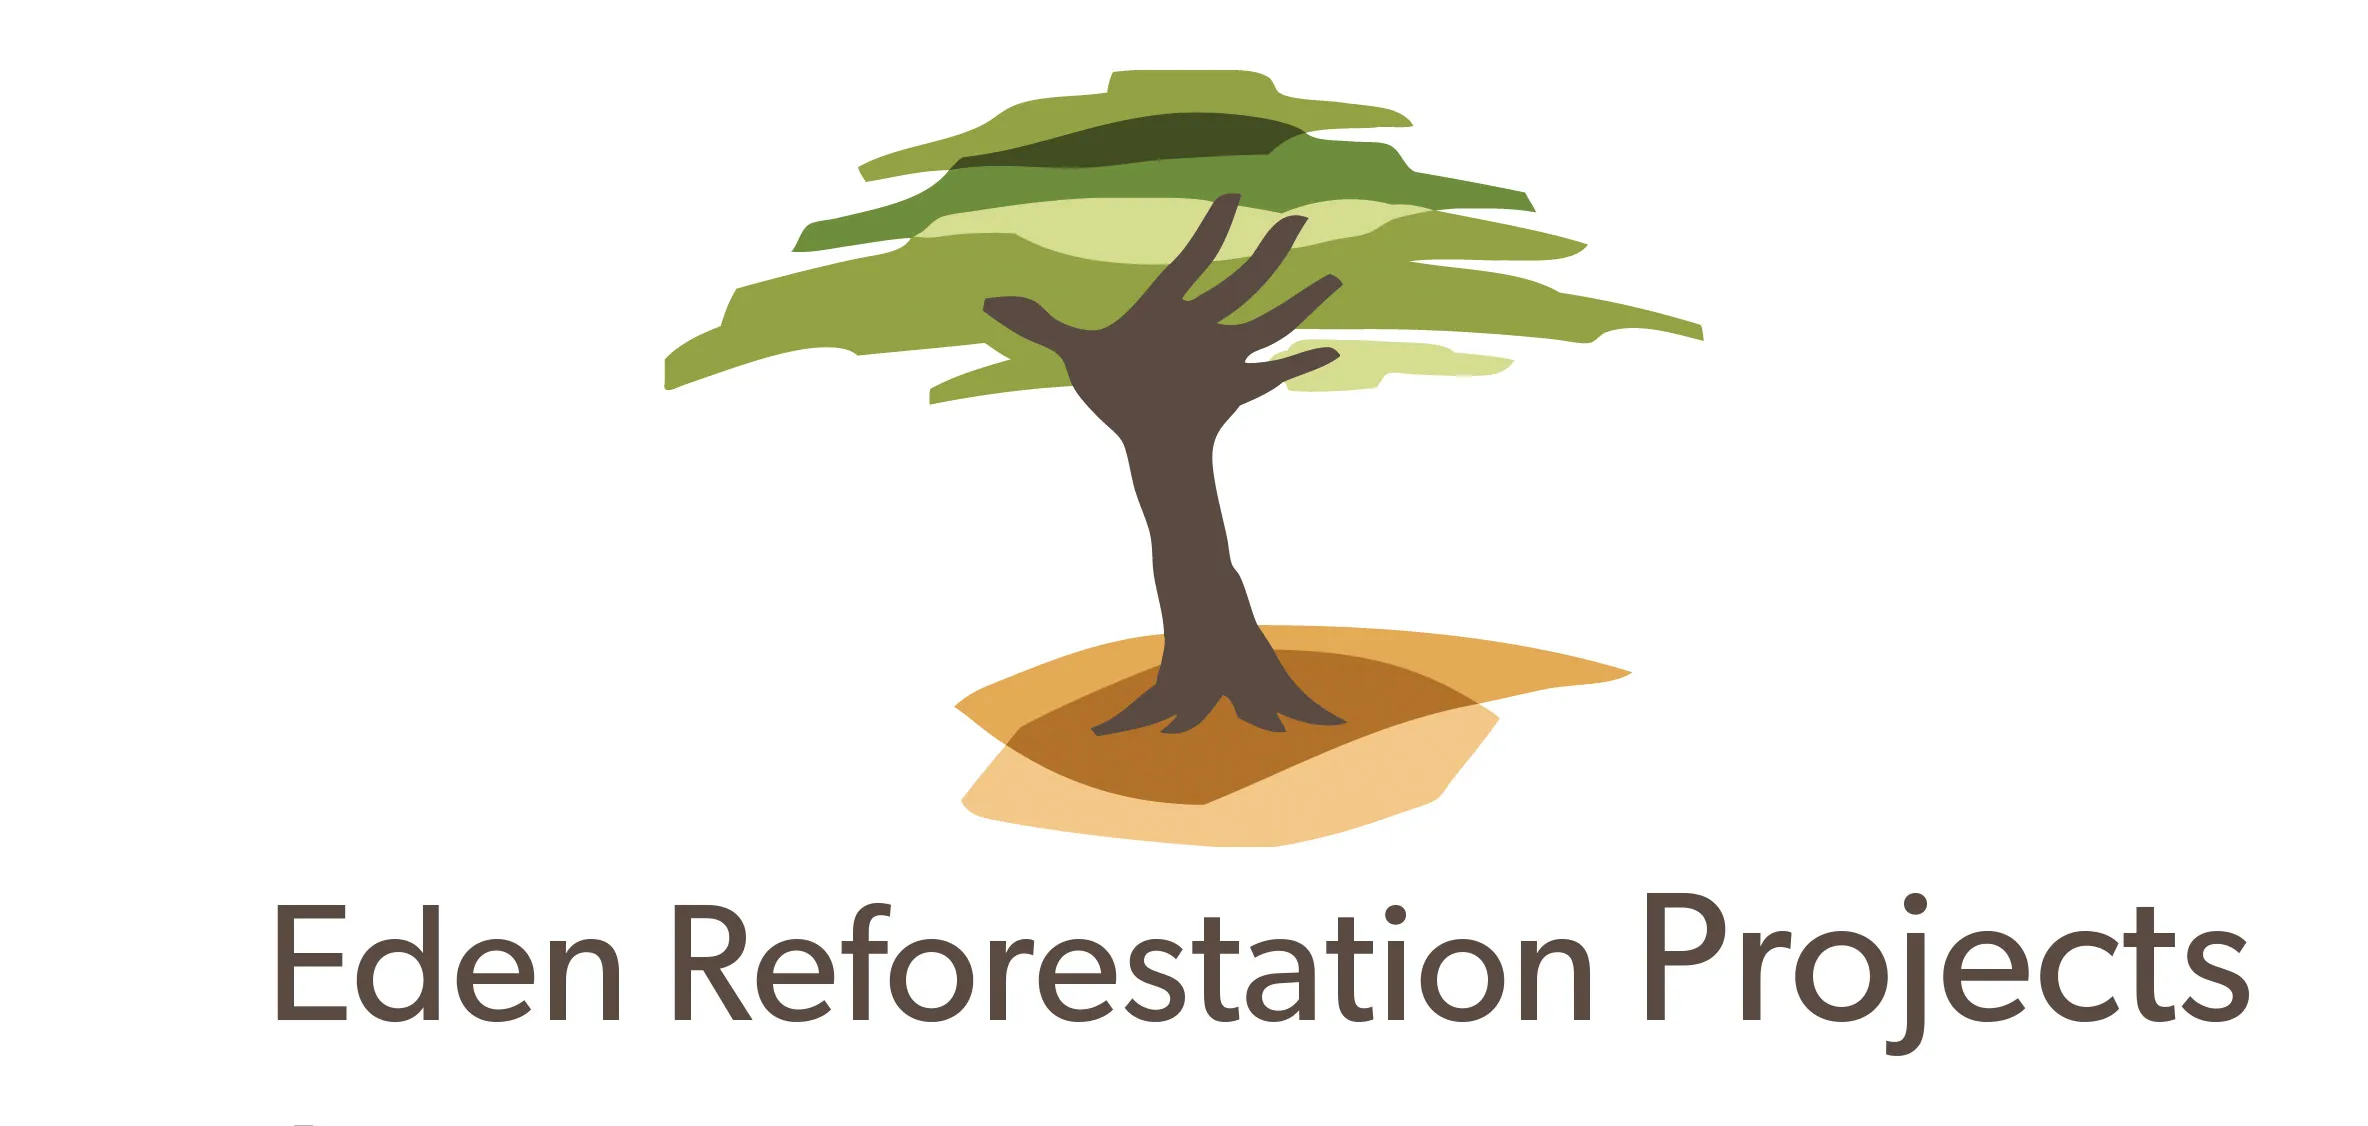 Eden Reforestation Projects Logo